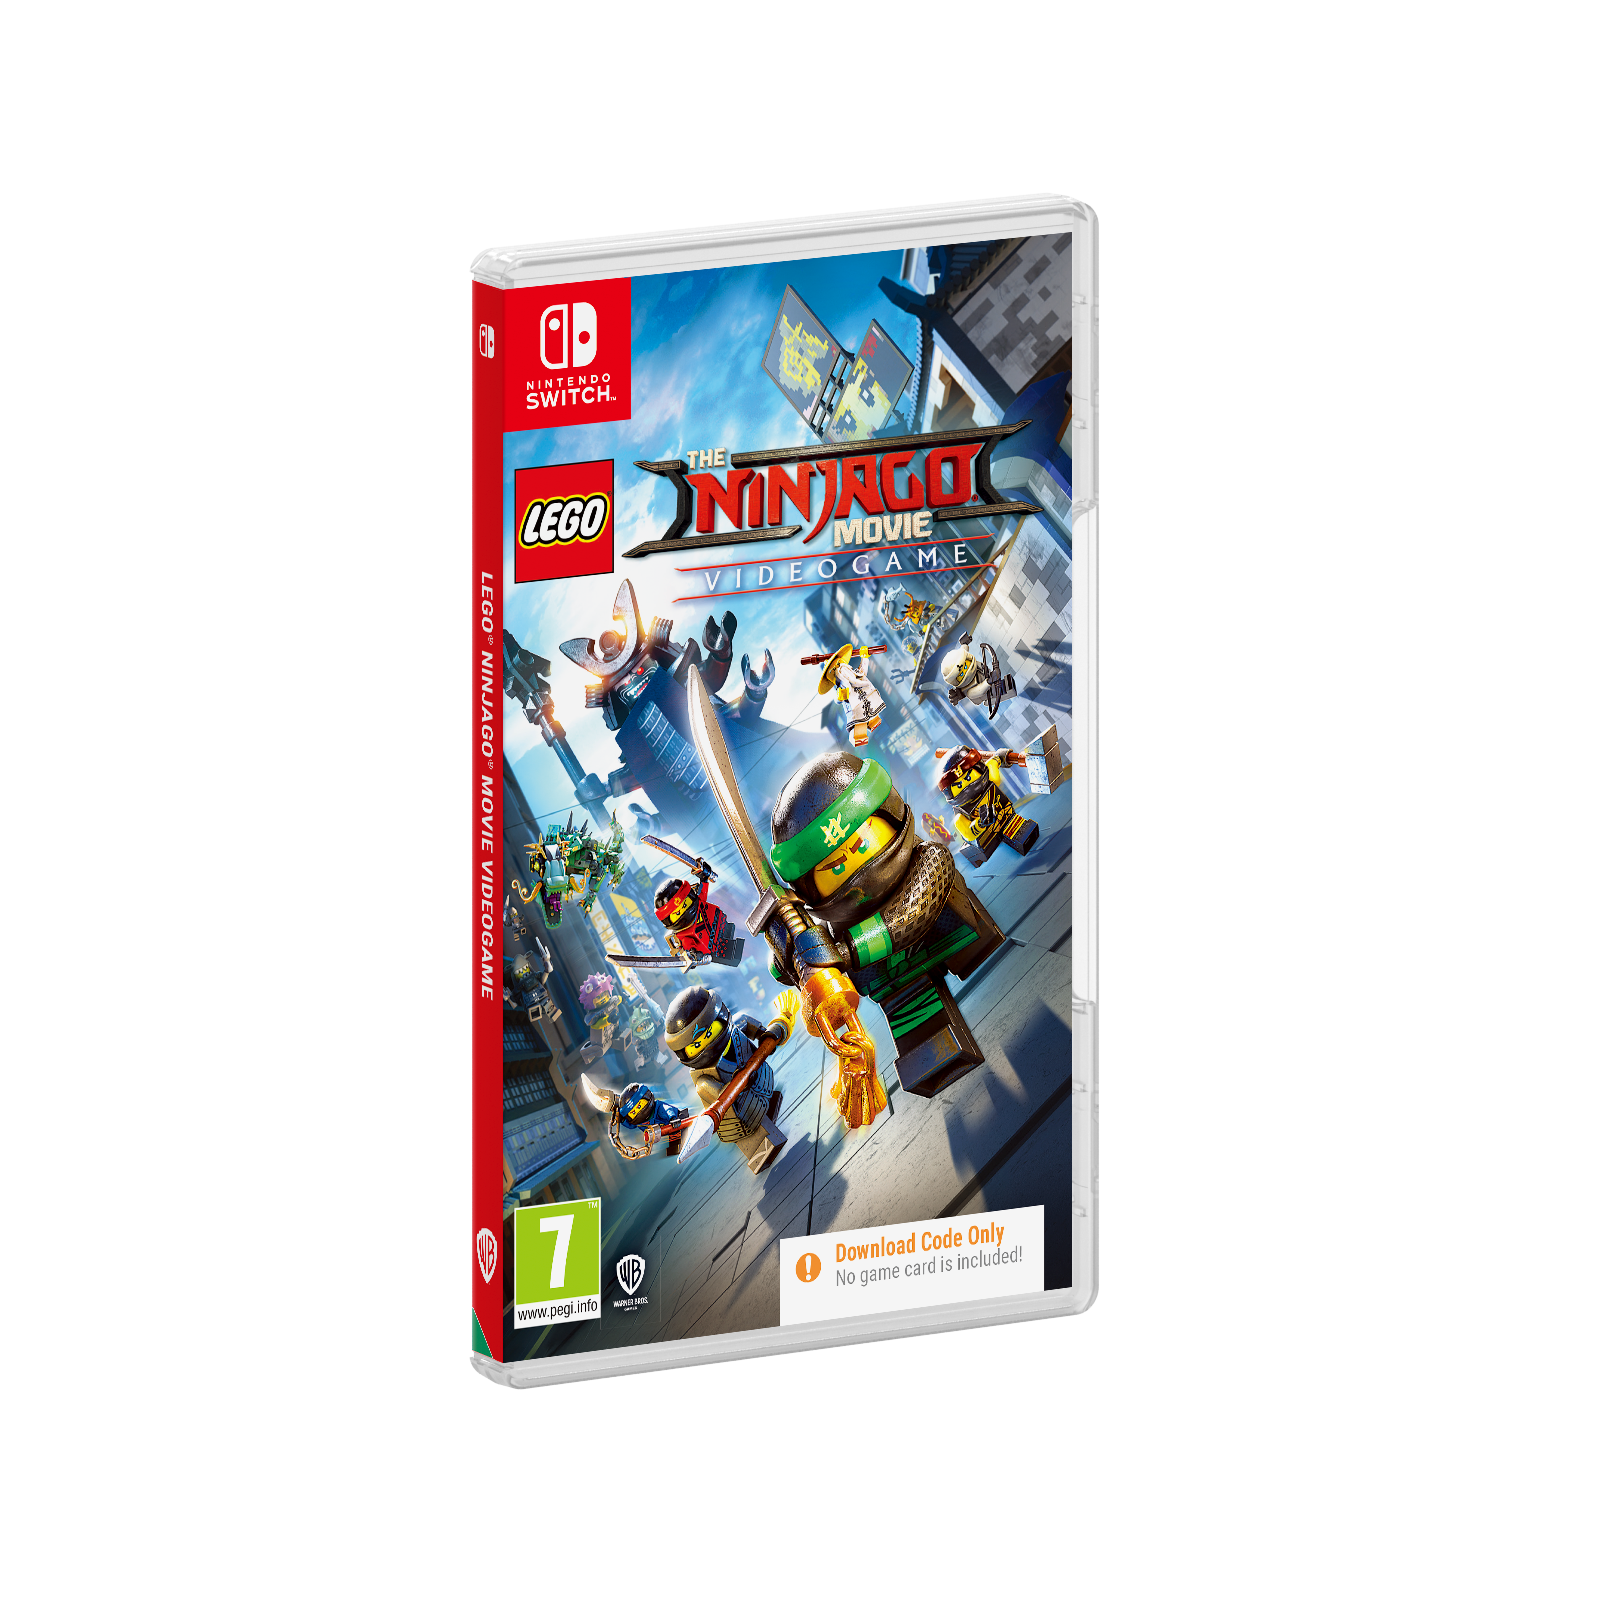  LEGO Ninjago Movie Game: Videogame (Nintendo Switch